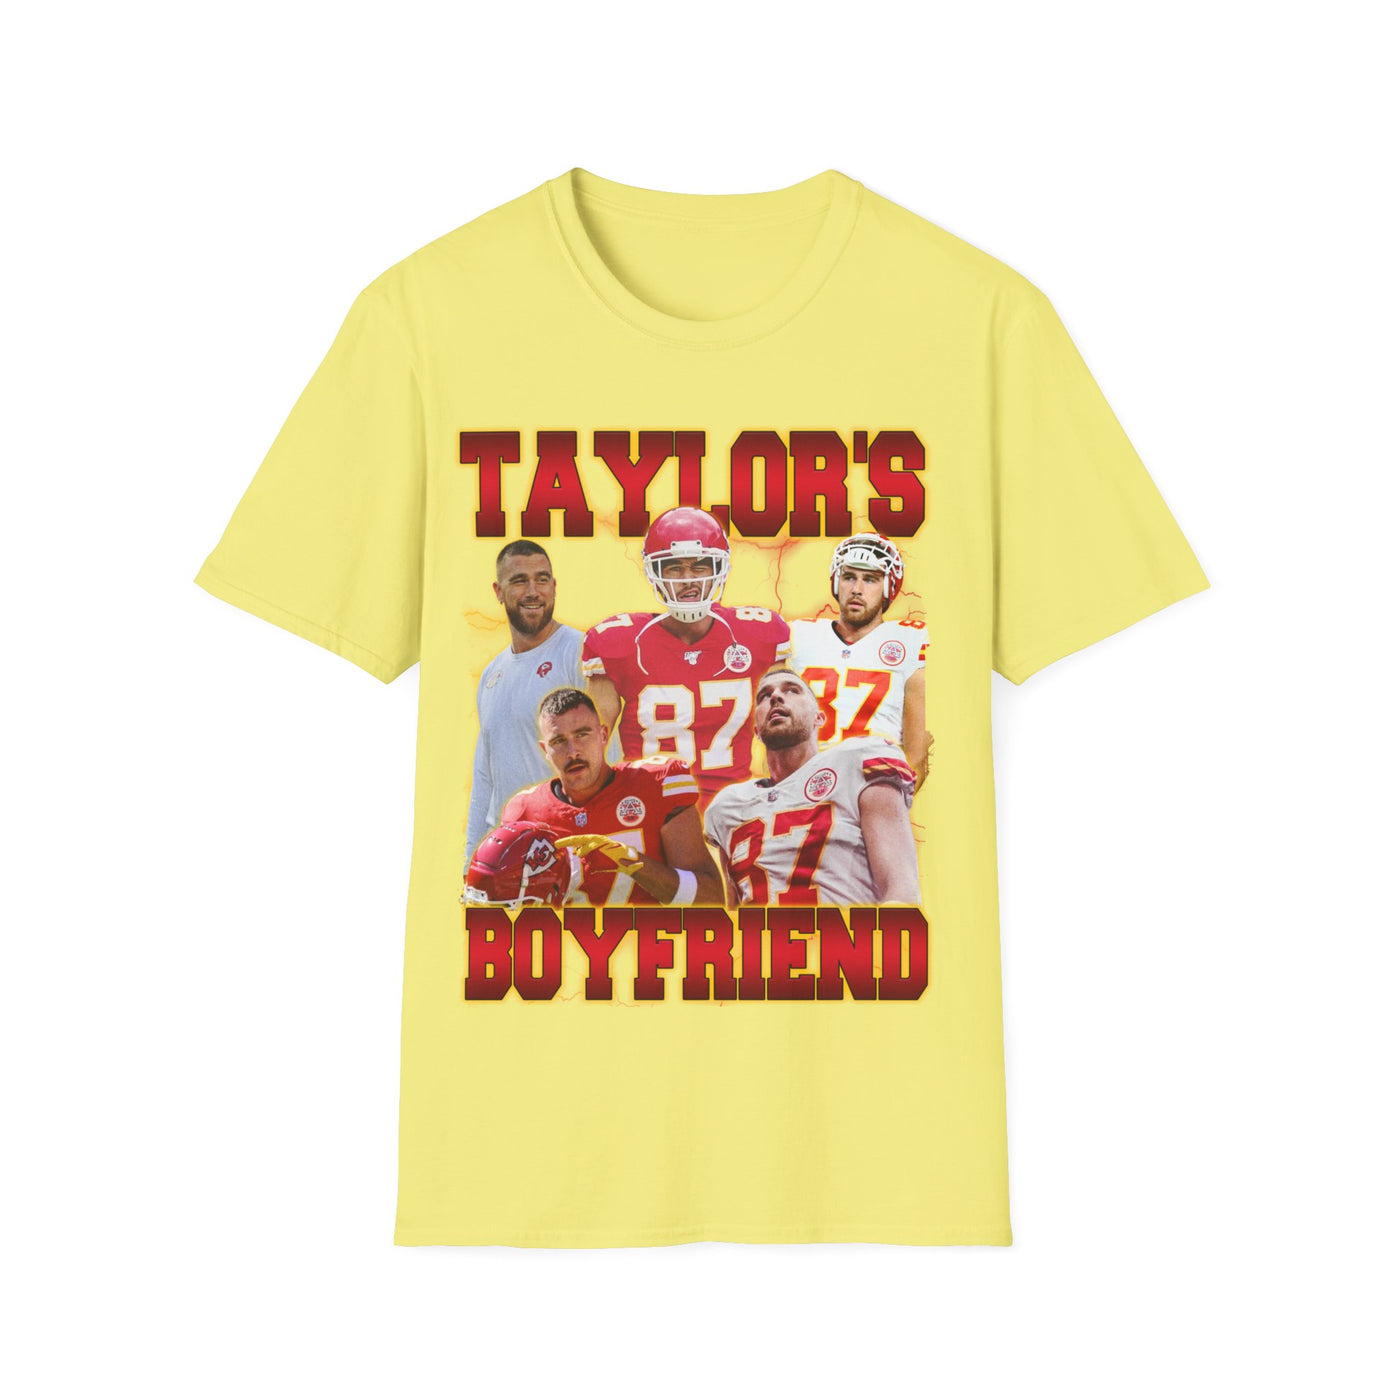 Taylor's Boyfriend